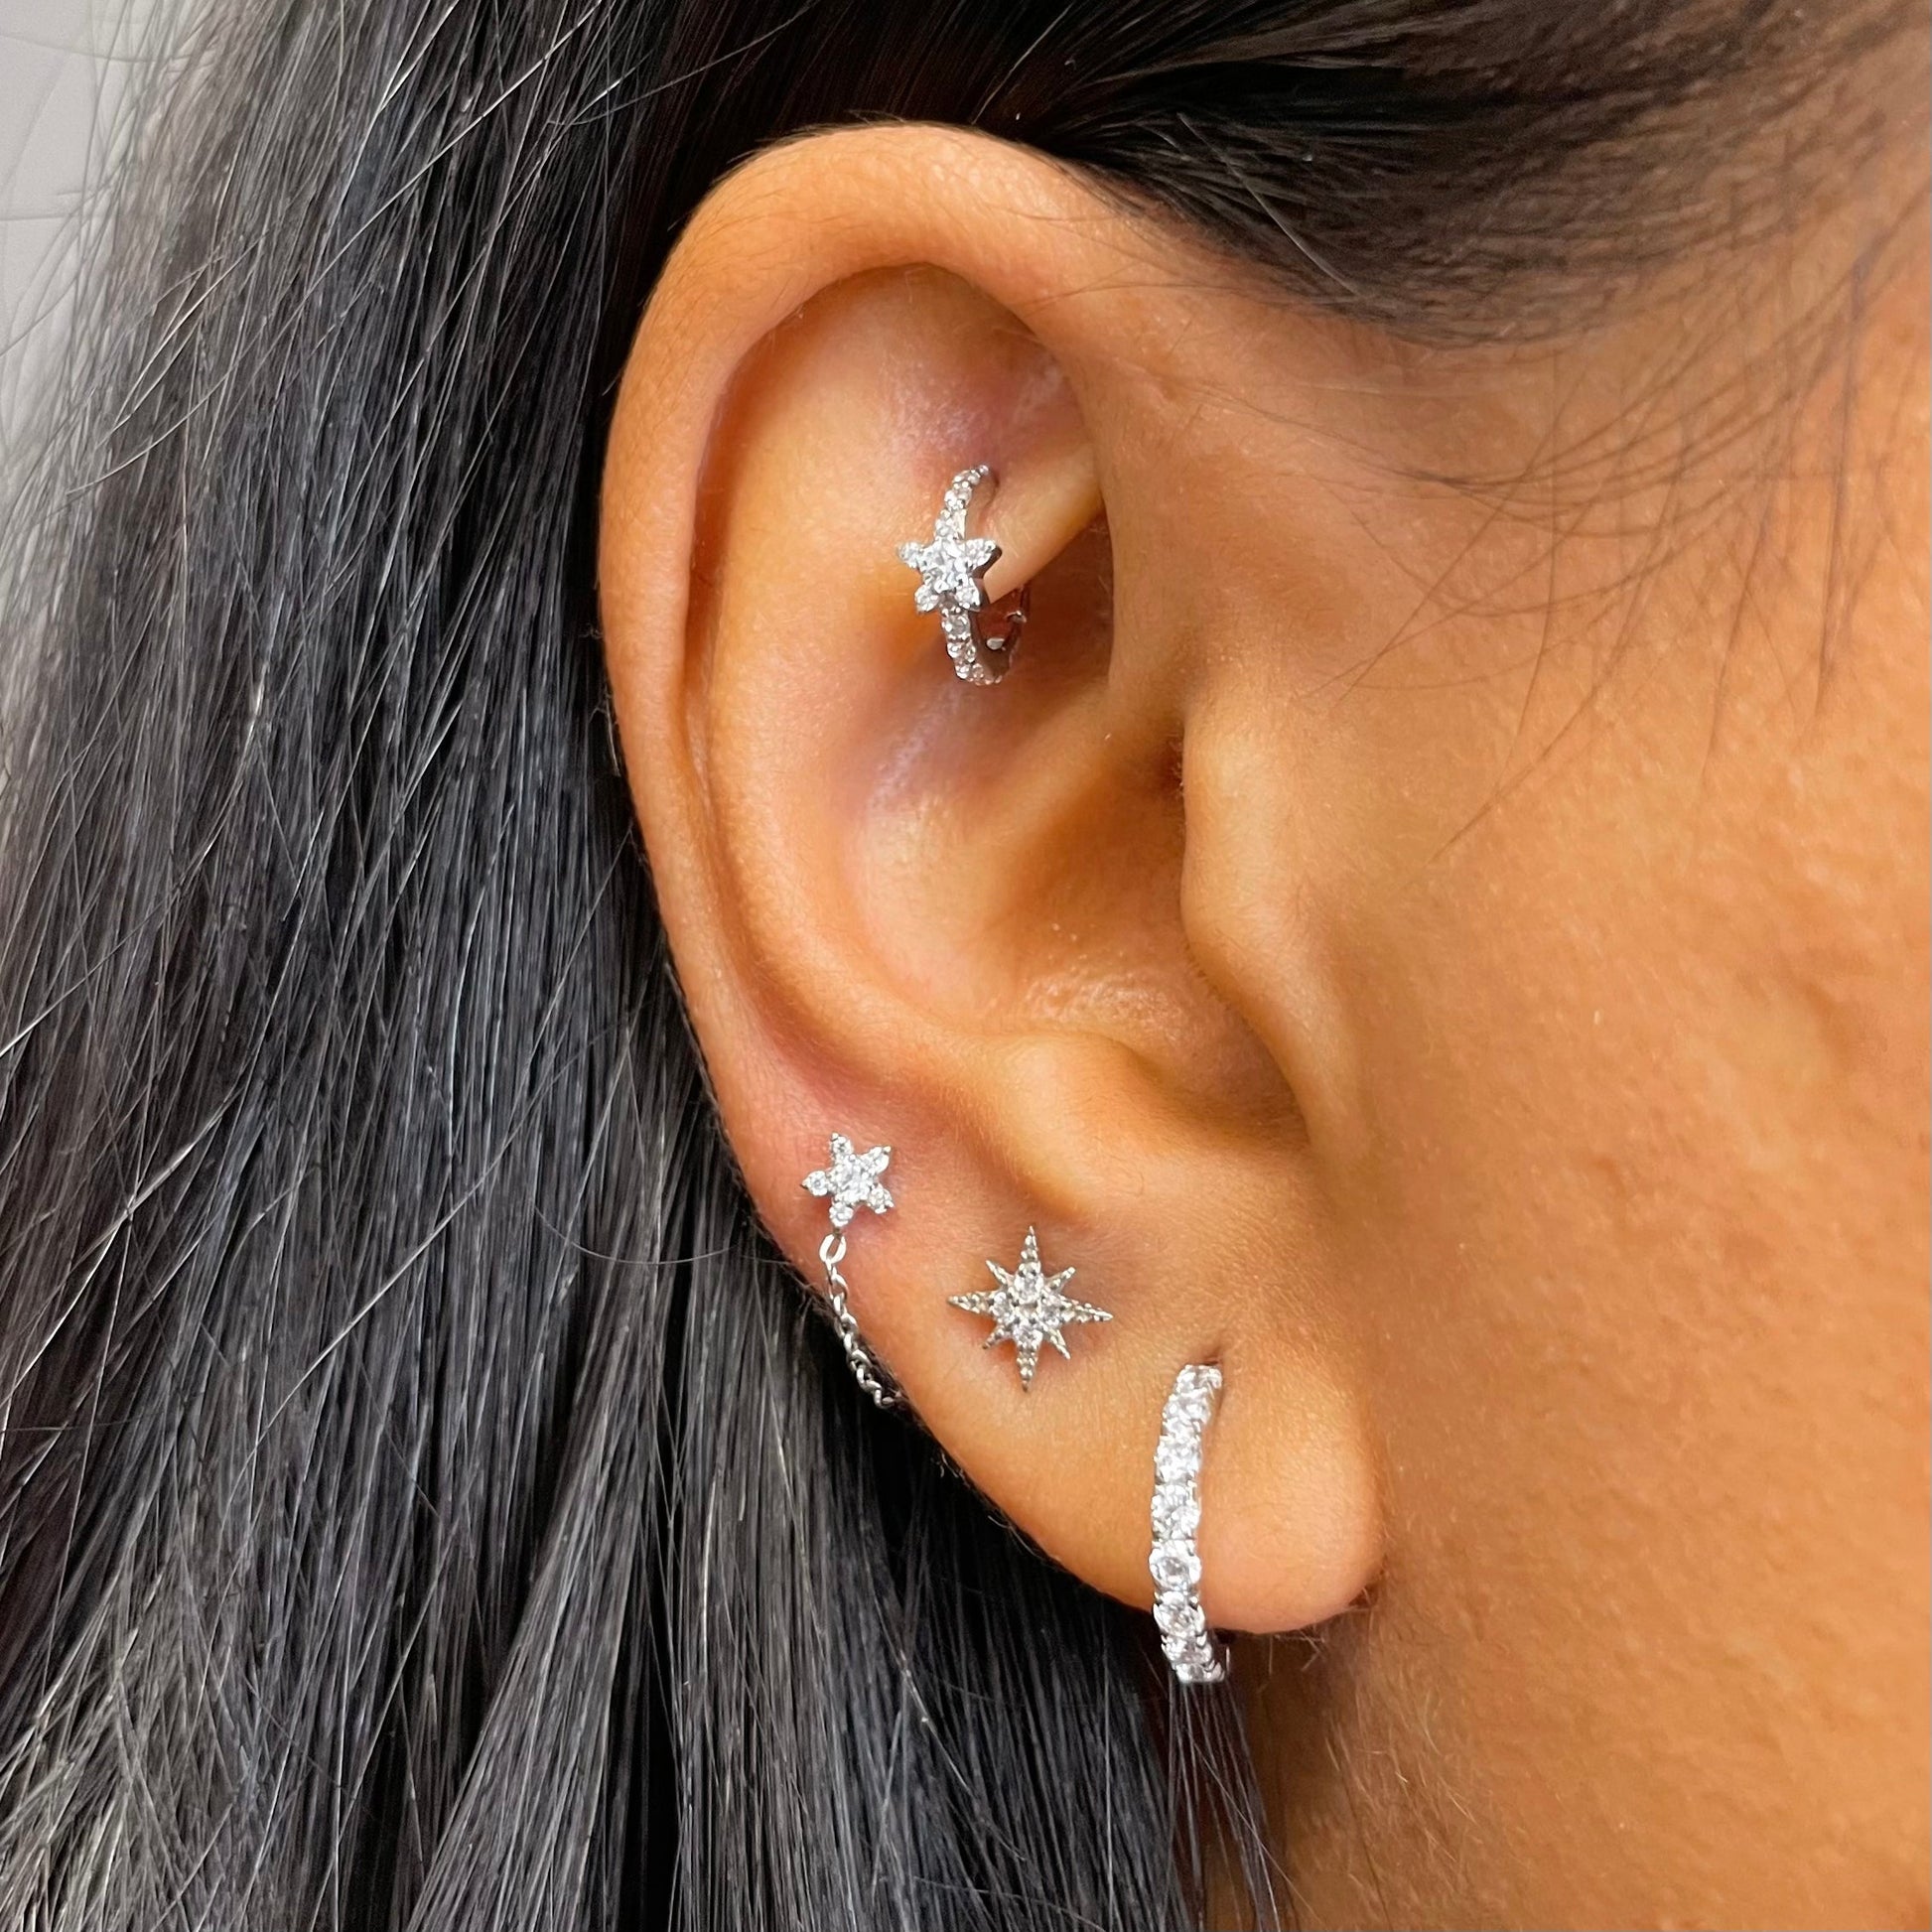 9k solid white gold 10mm simple crystal huggie earring pair - LAURA BOND jewellery